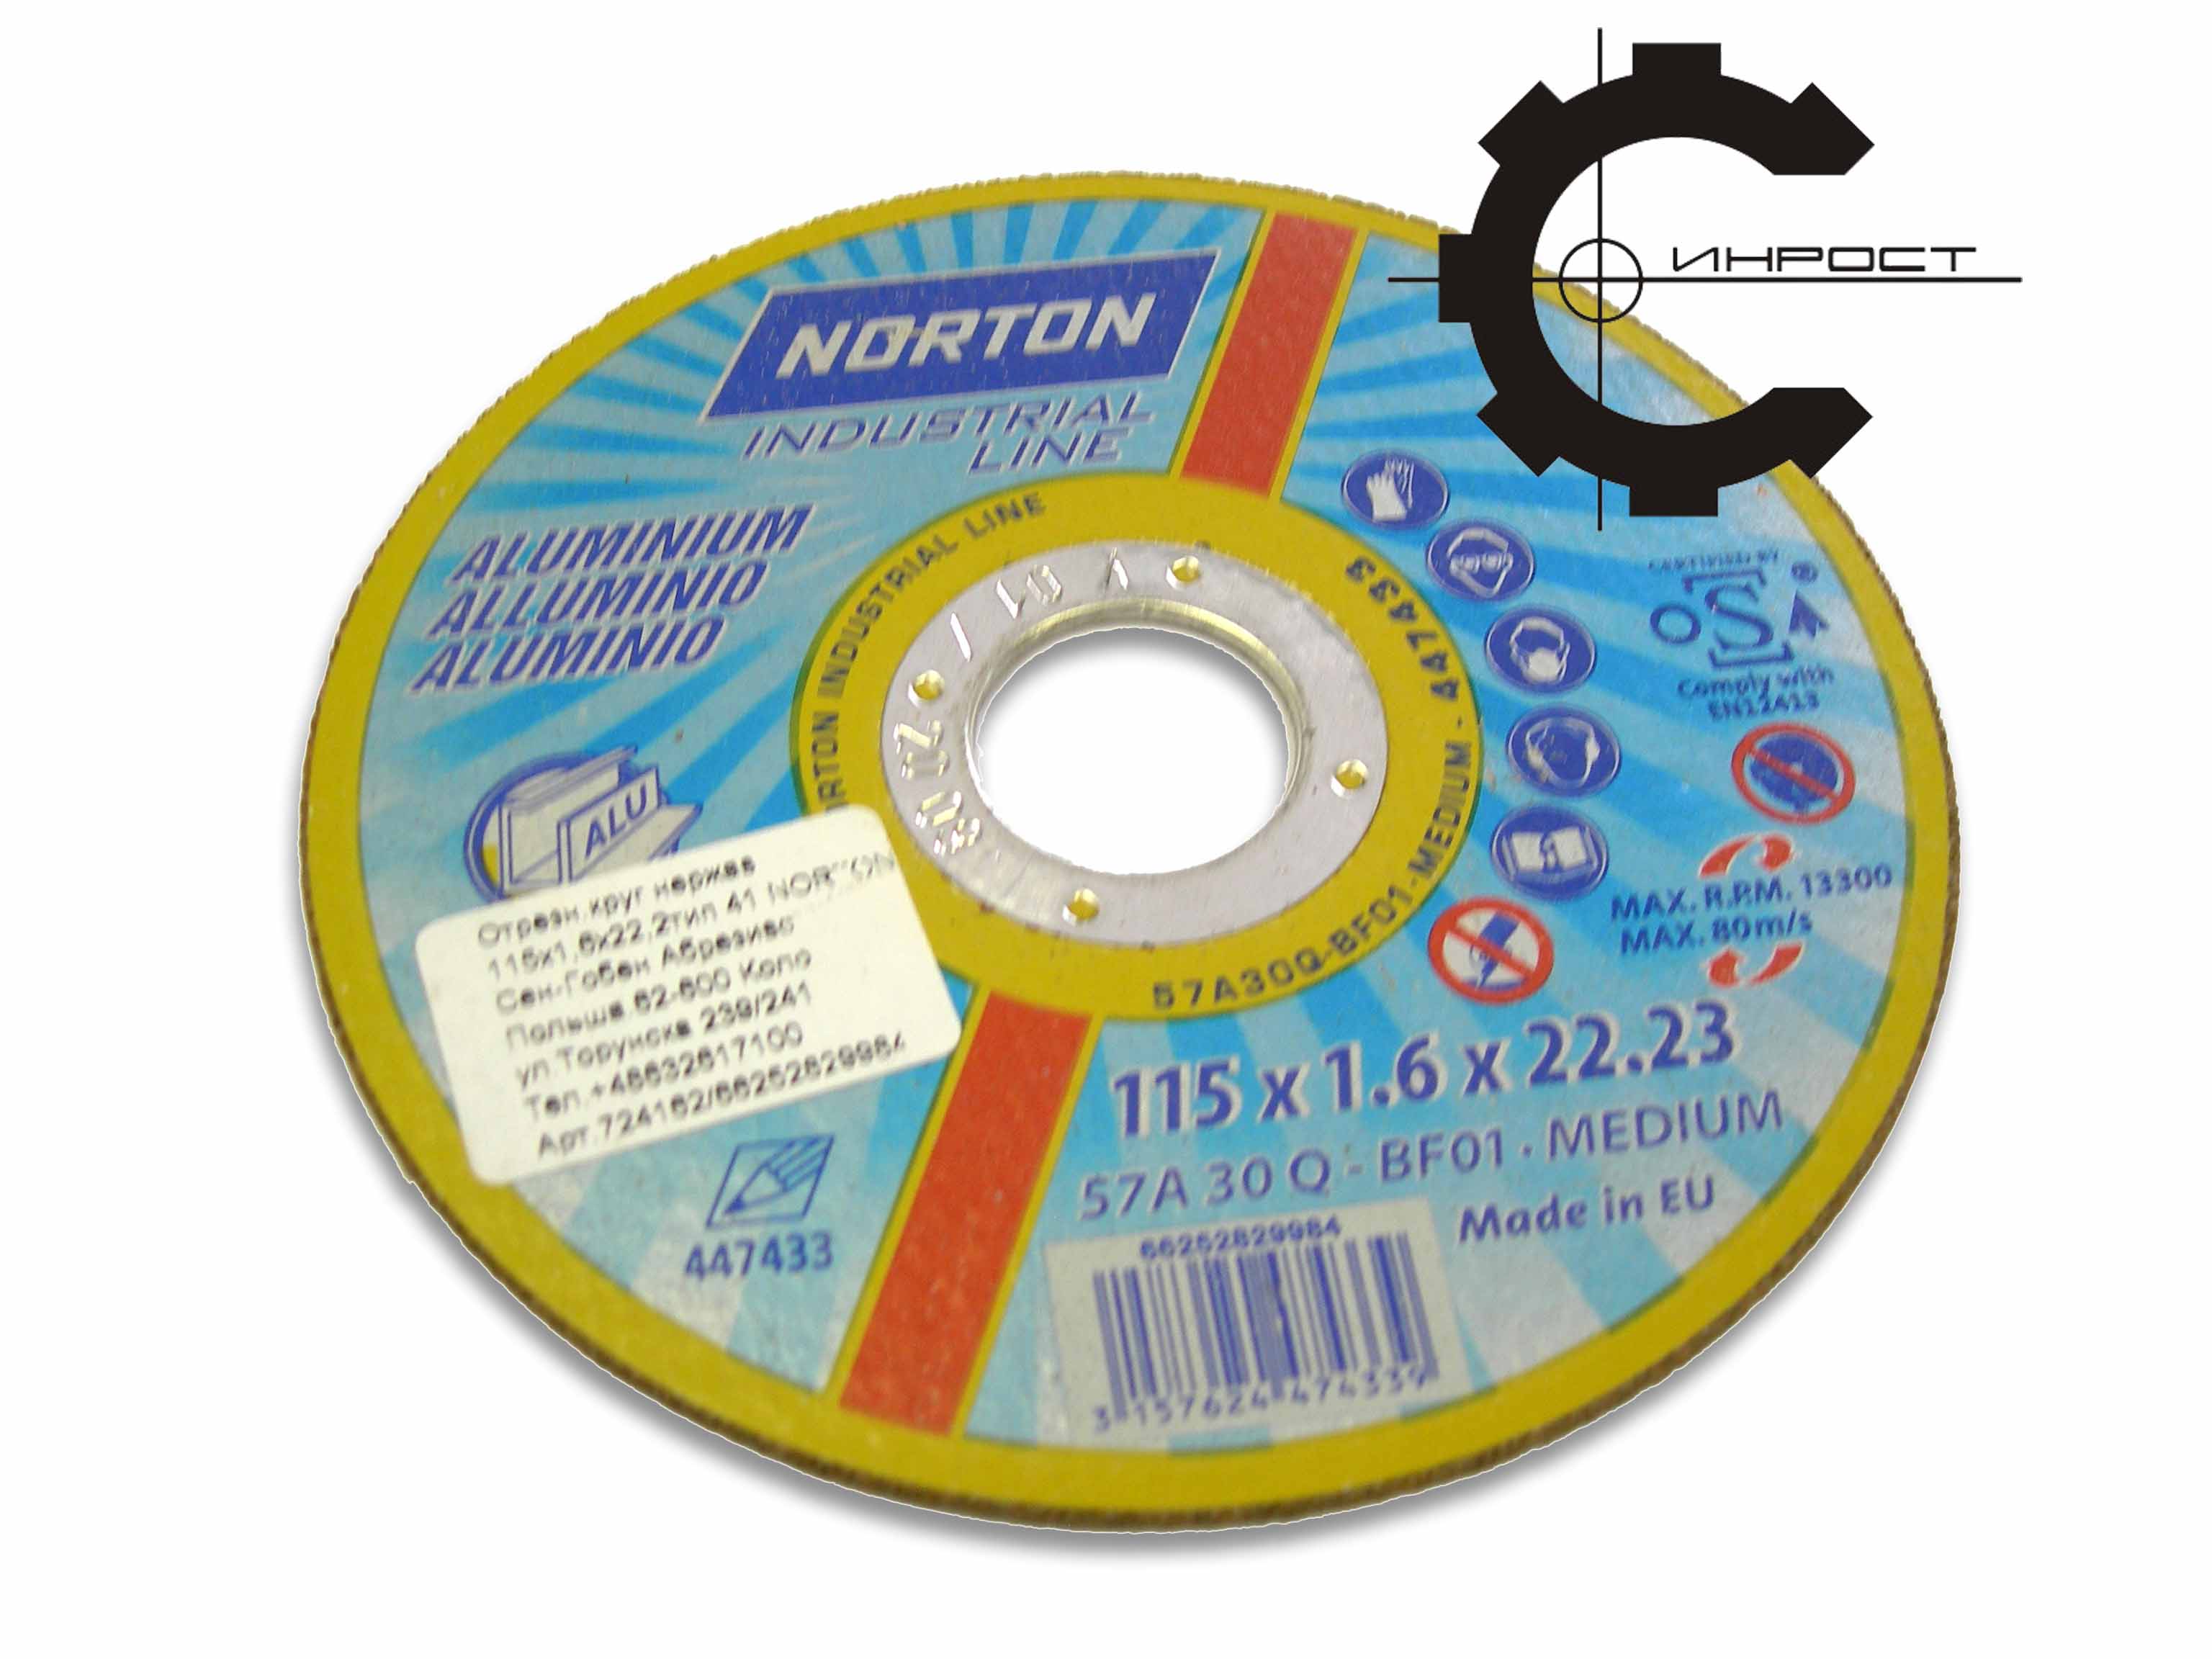      1151.622,2 .  41 (Norton-Vulcan)